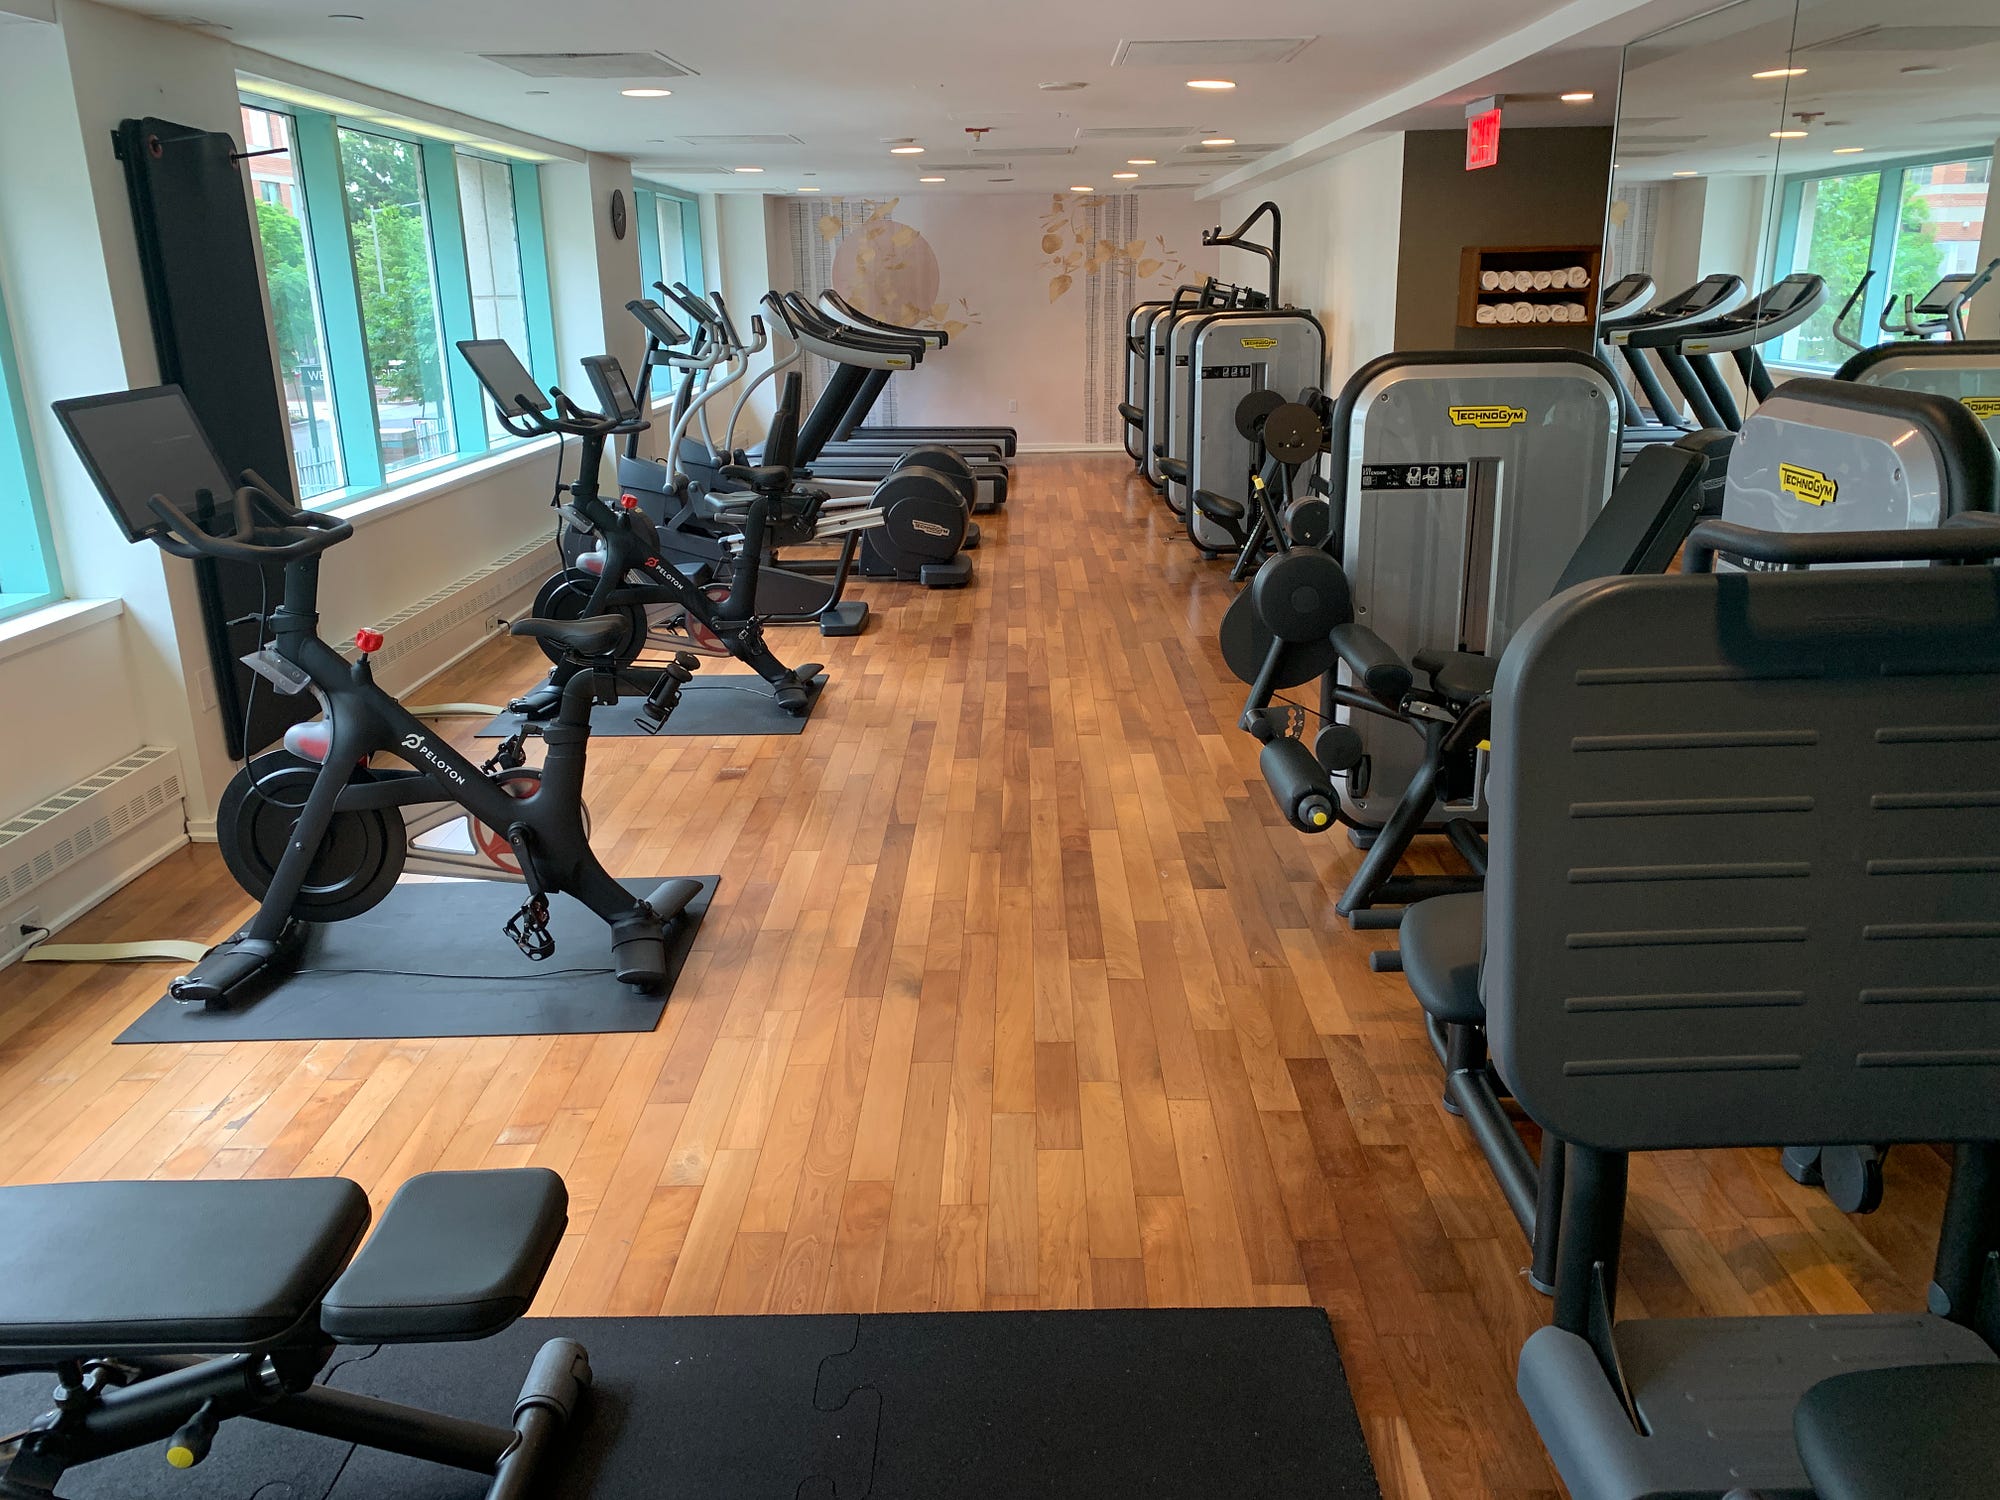 Park Hyatt Washington D.C.’s gym with various cardio and strength fitness equipment.